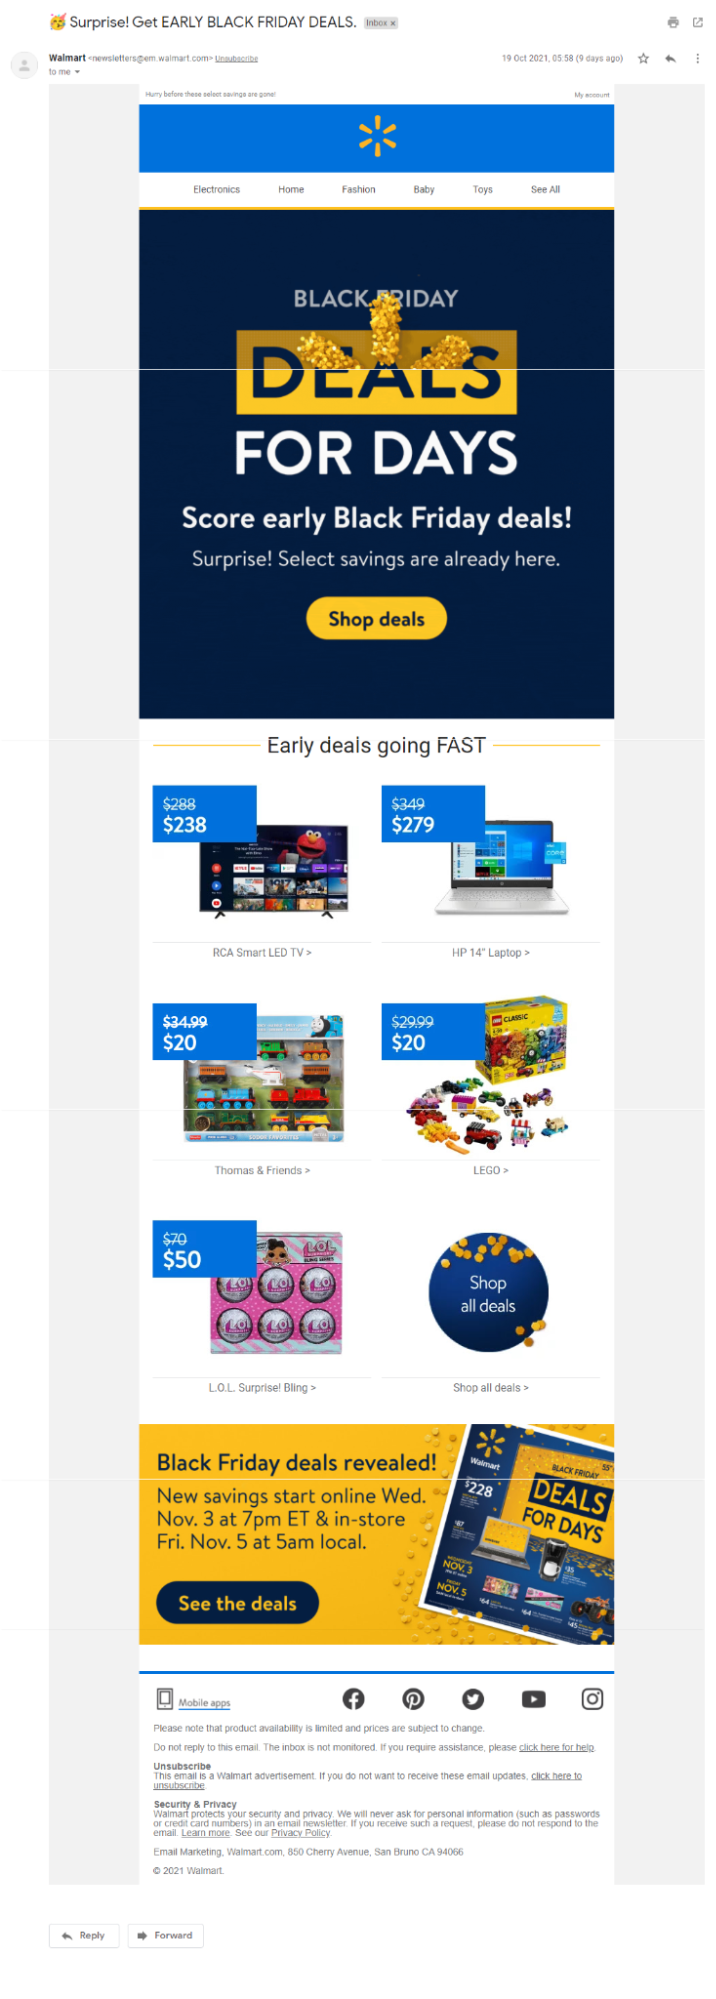 Walmart Black Friday deals email template